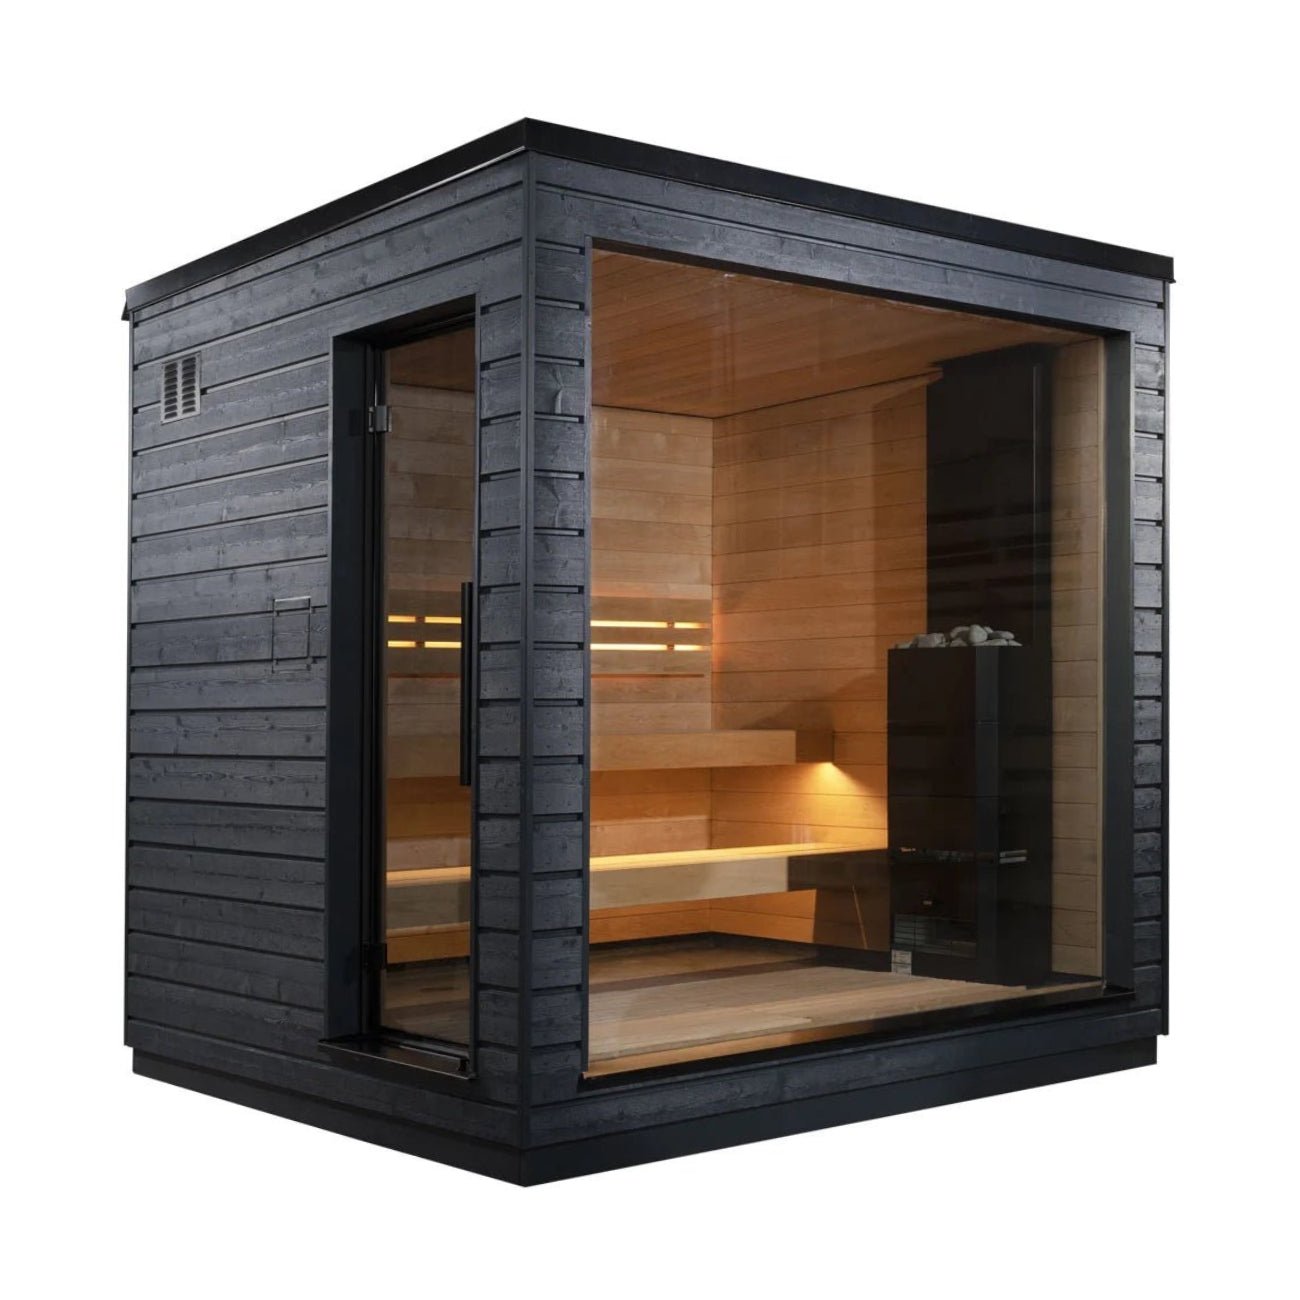 SaunaLife model G6 Outdoor Sauna - Elite Vitality